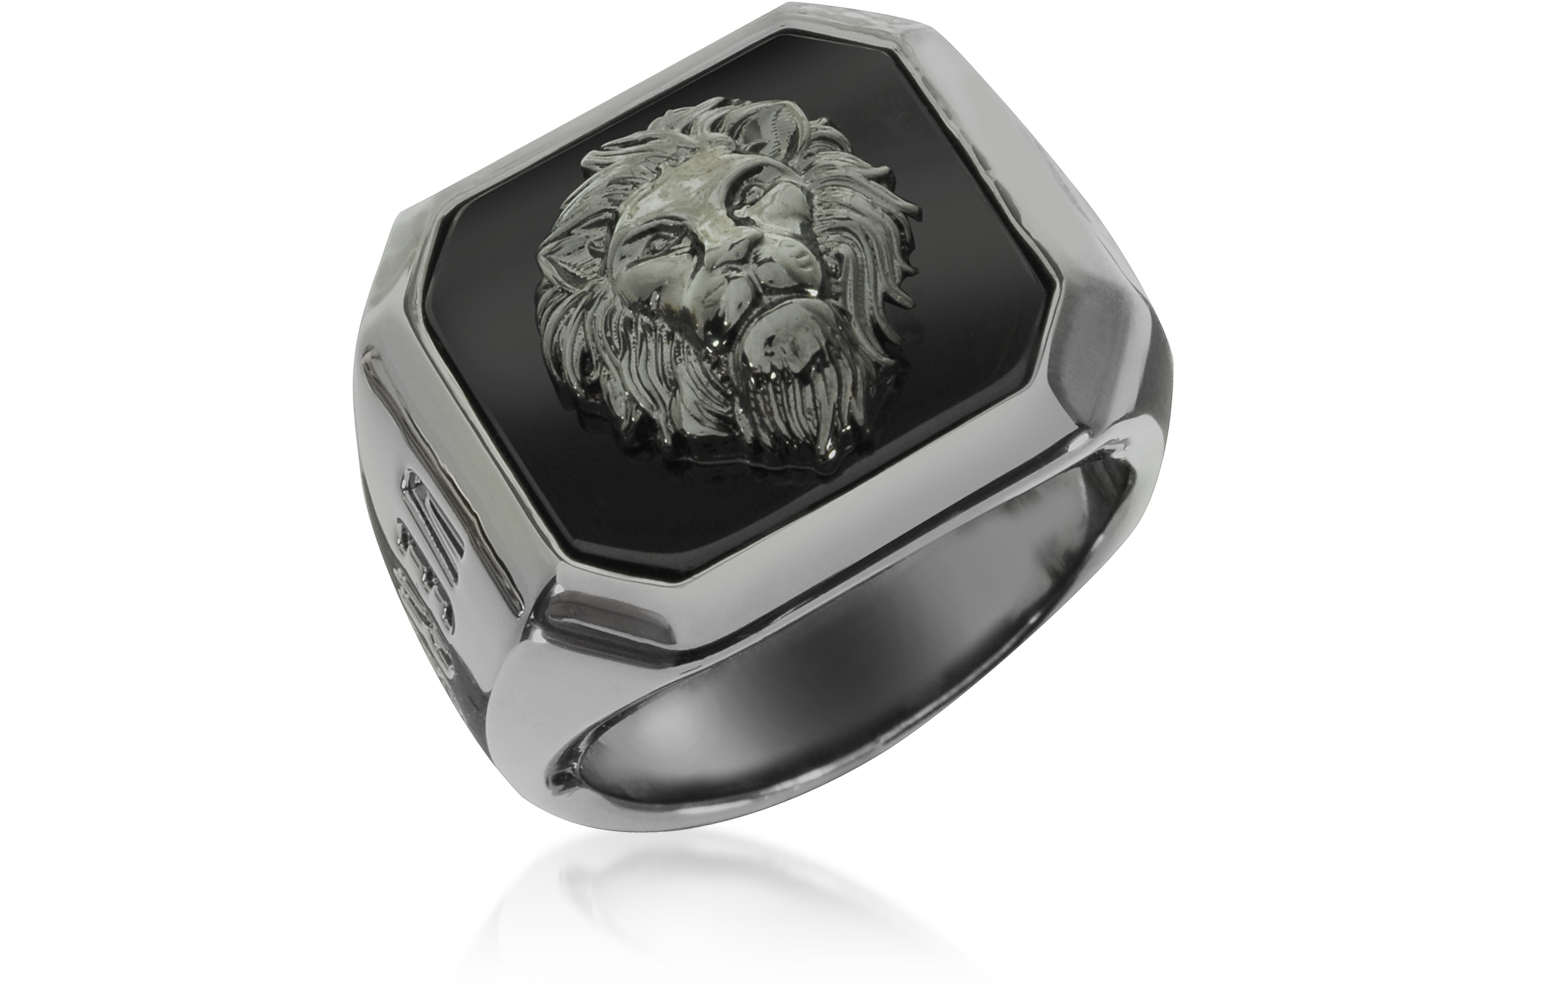 versace lion ring mens